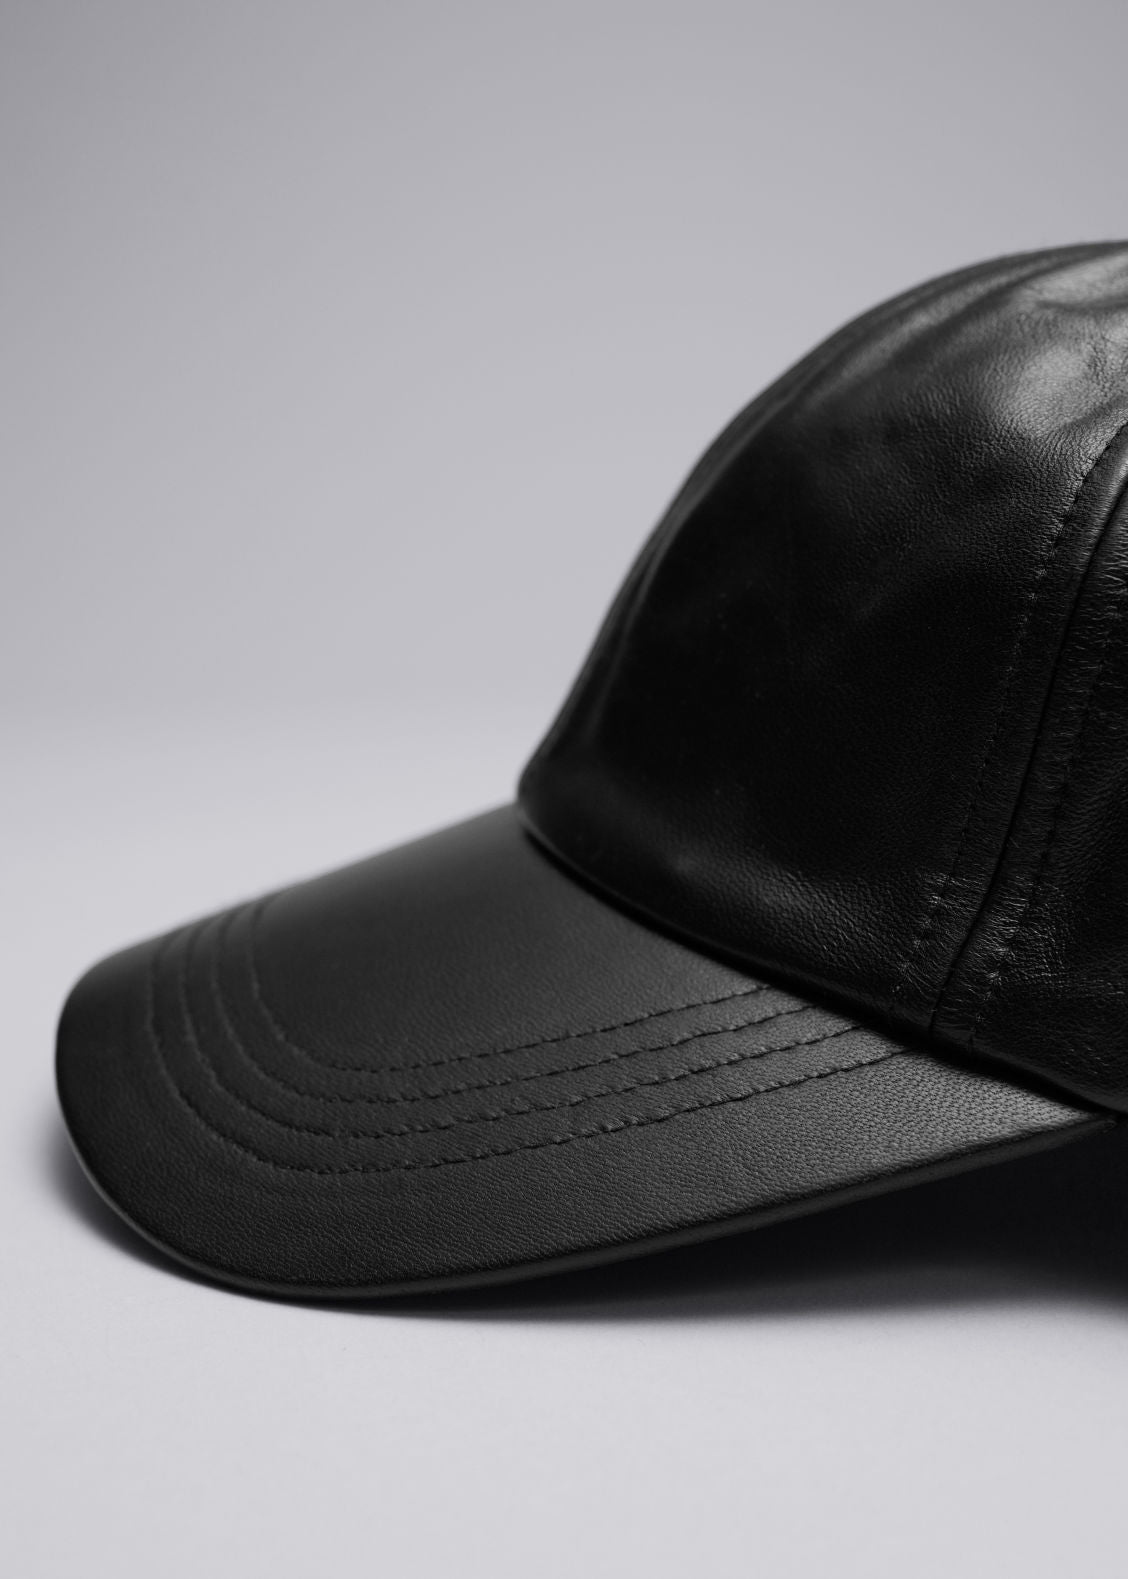 Leather baseball cap hat